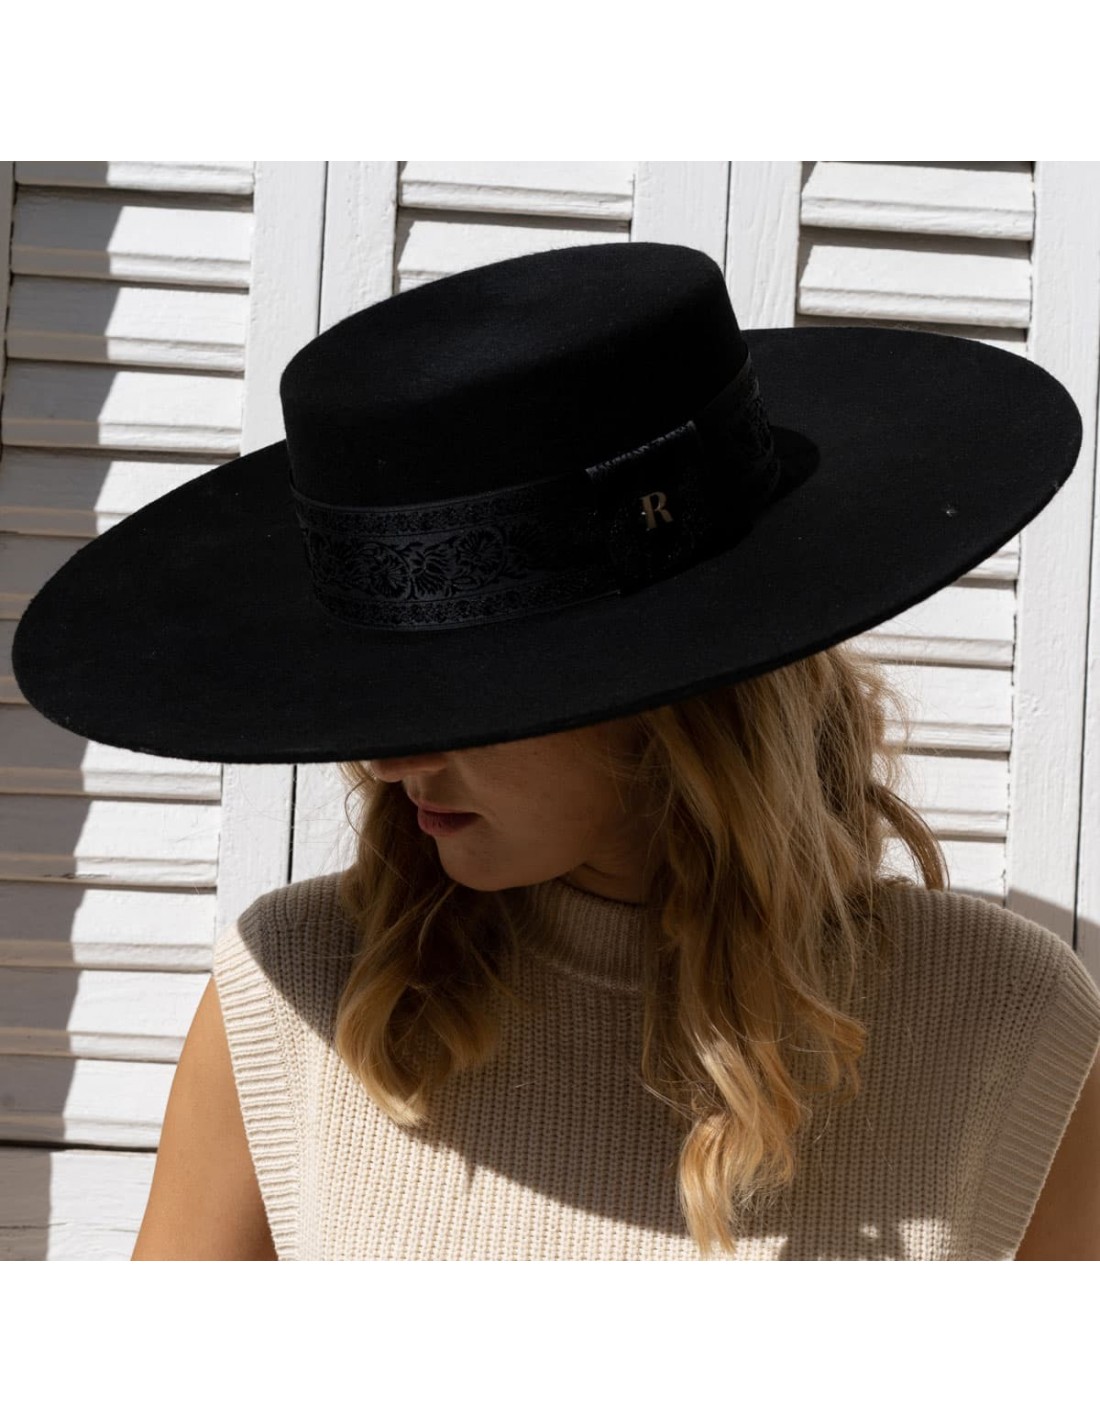 Black Wool Felt Boater Hat - Toledo - Ladies Hats for Weddings UK